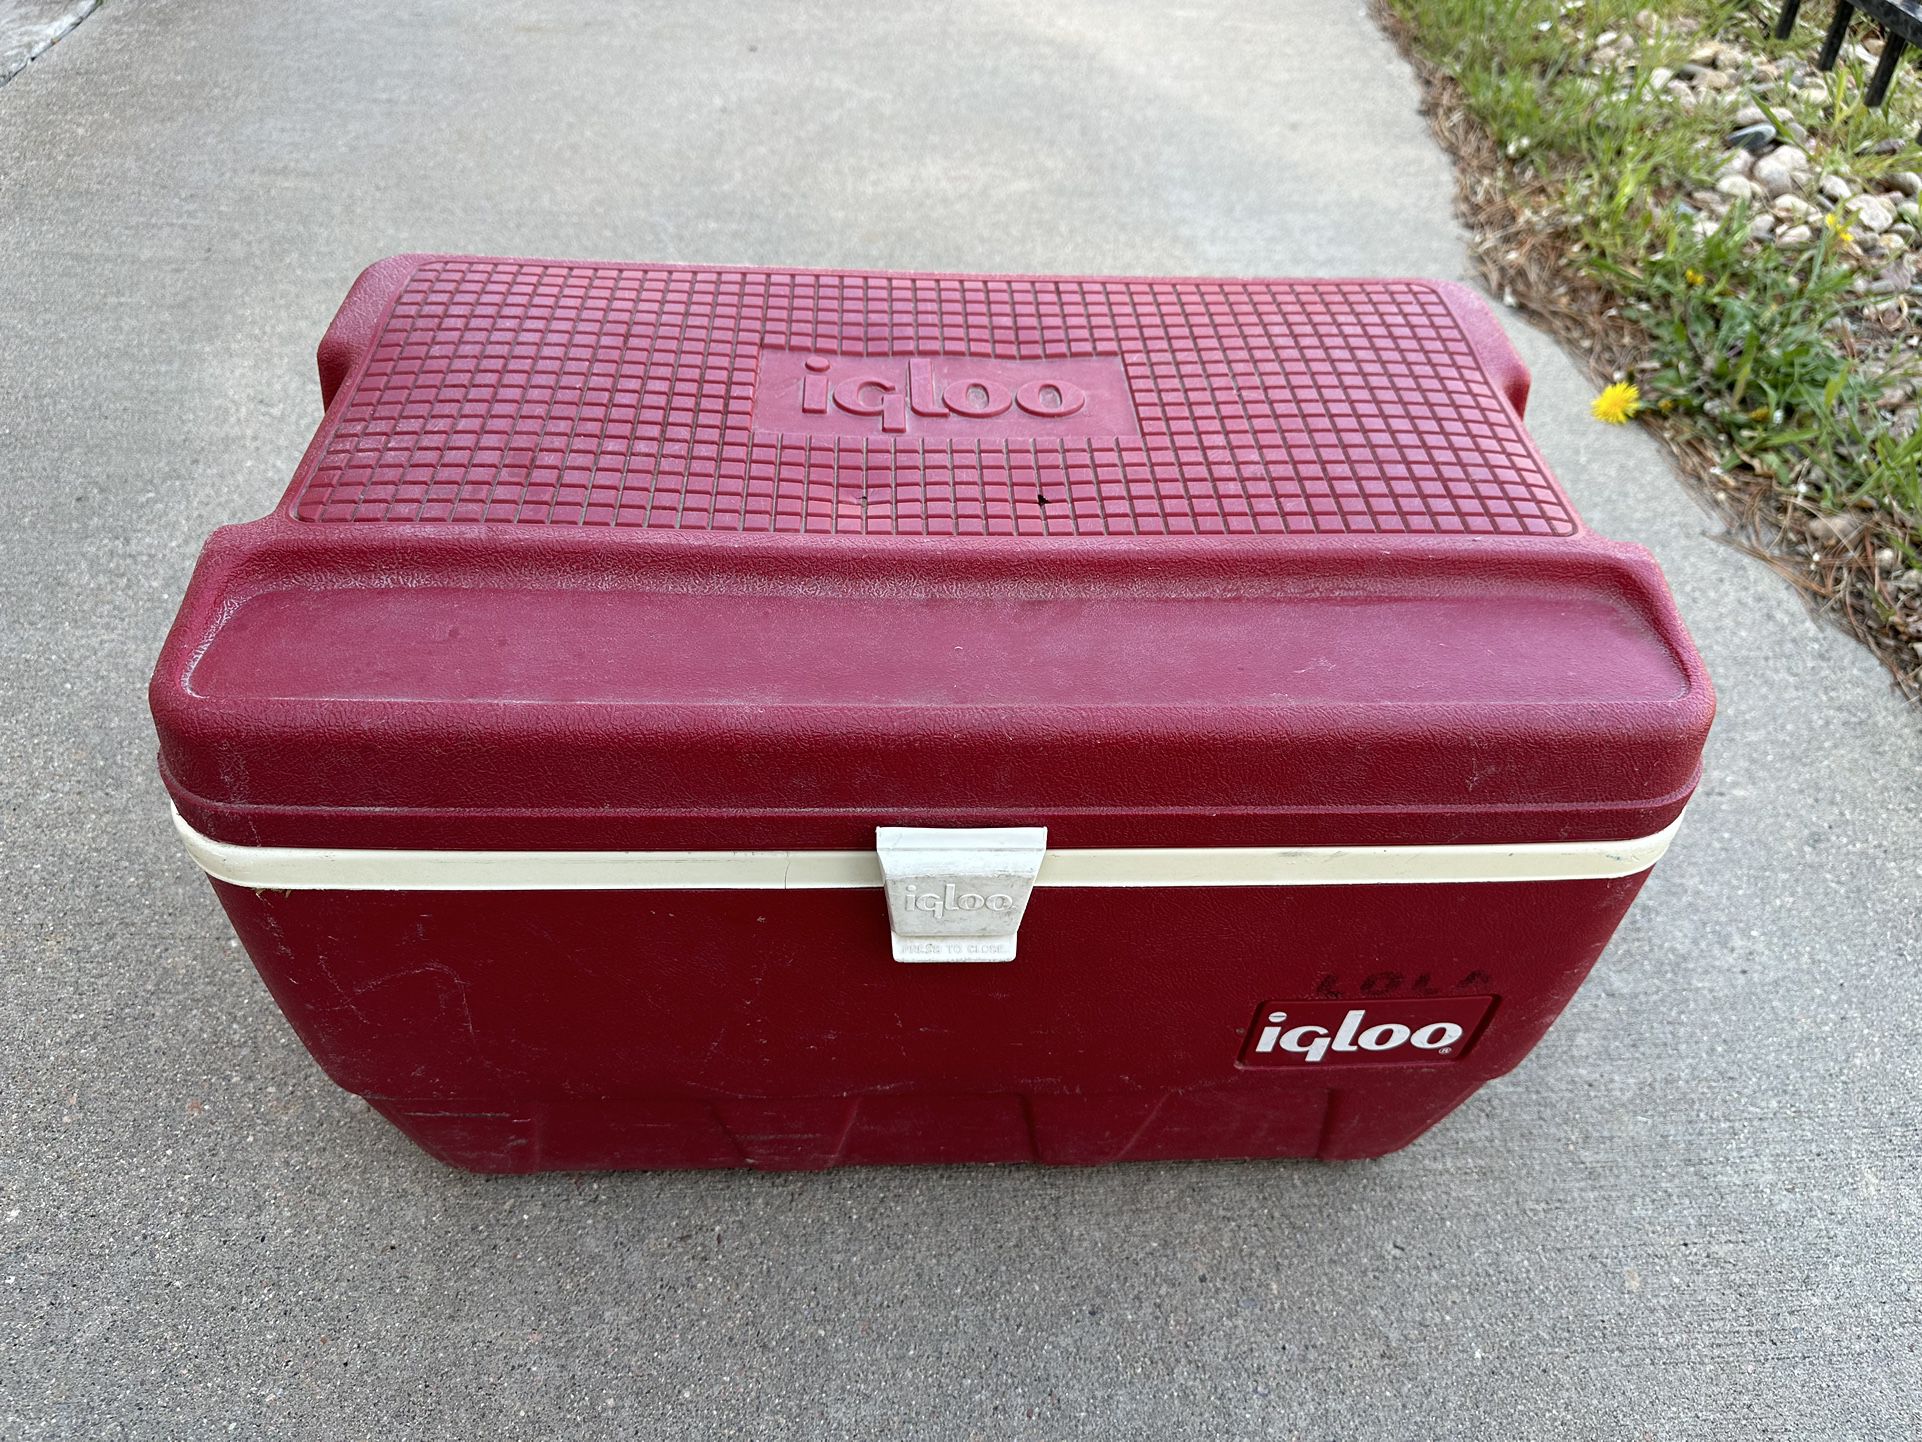 Vintage Retro Red Igloo Cooler Ice Box